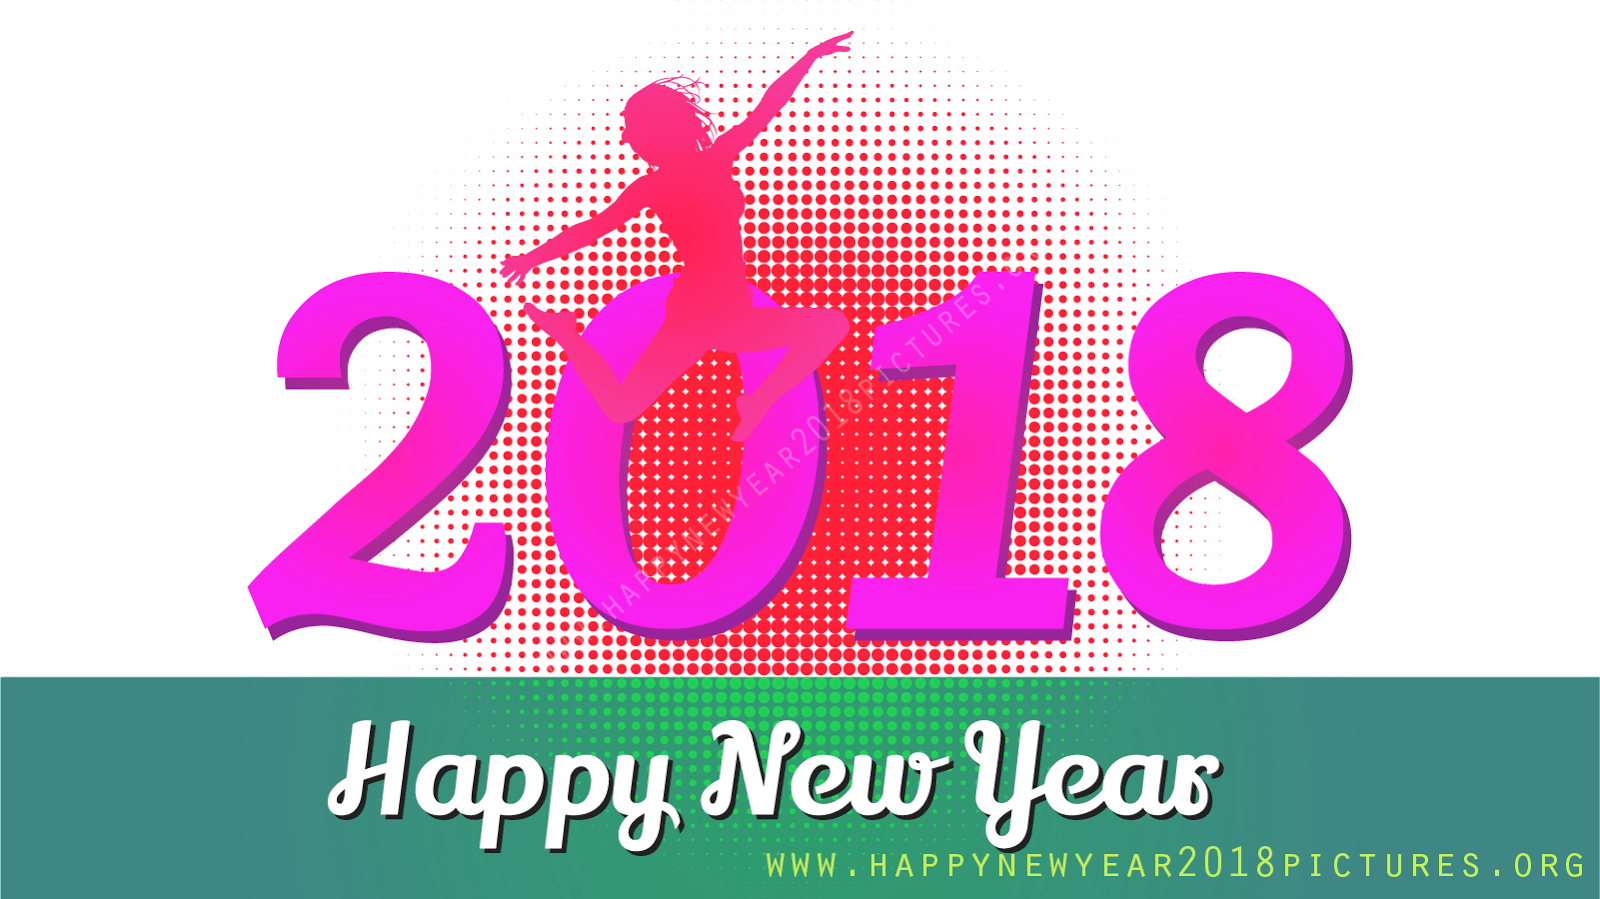 Happy New Year 2018 HD wallpaper screensaver image